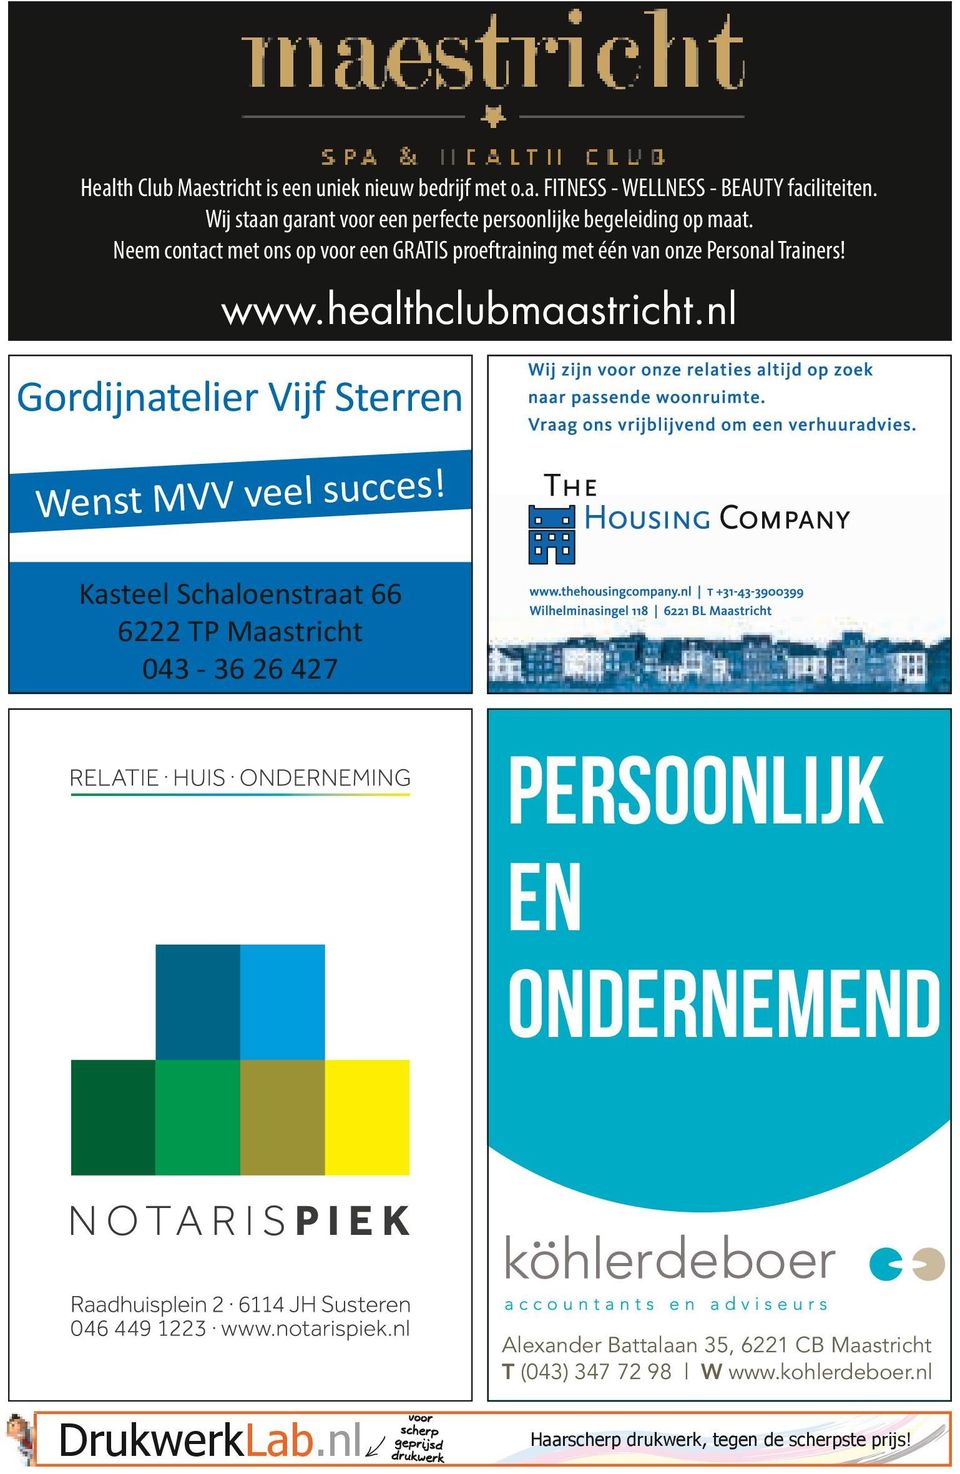 healthclubmaastricht.nl Gordijnatelier Vijf Sterren 0103076.pdf 1 25-6-2013 9:03:05 Wenst MVV veel succes!